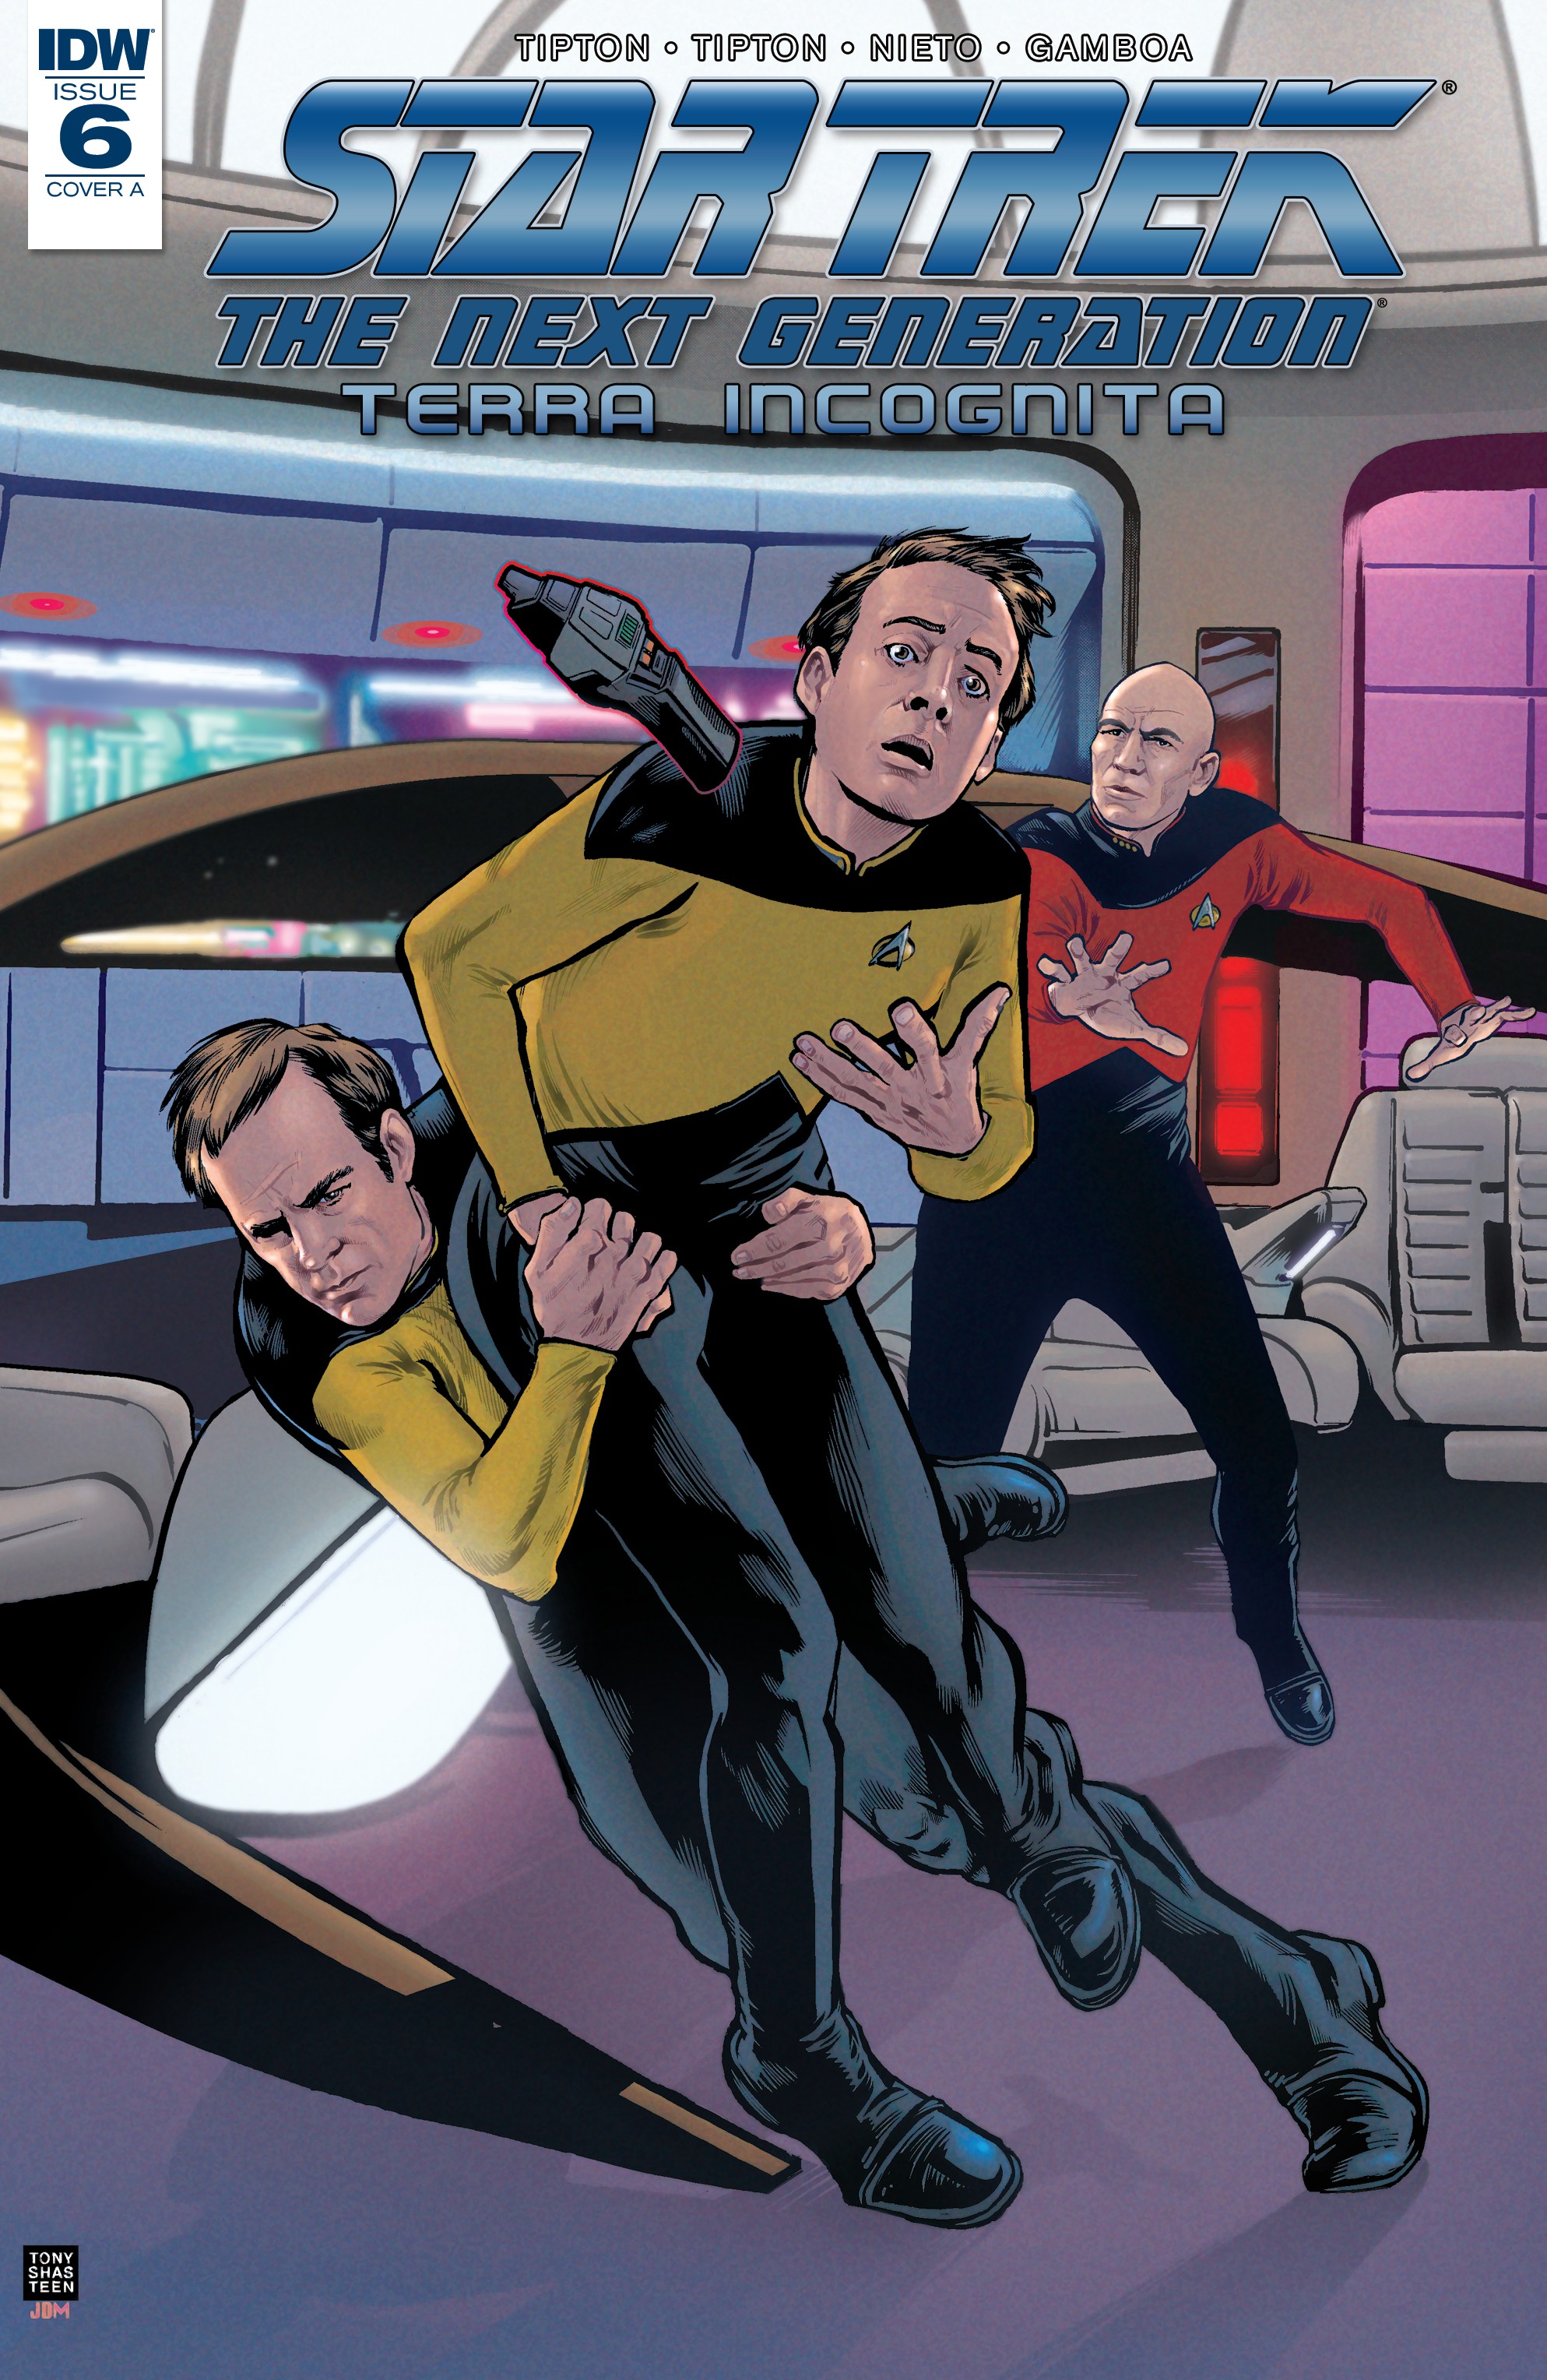 Star Trek: The Next Generation: Terra Incognita issue 6 - Page 1